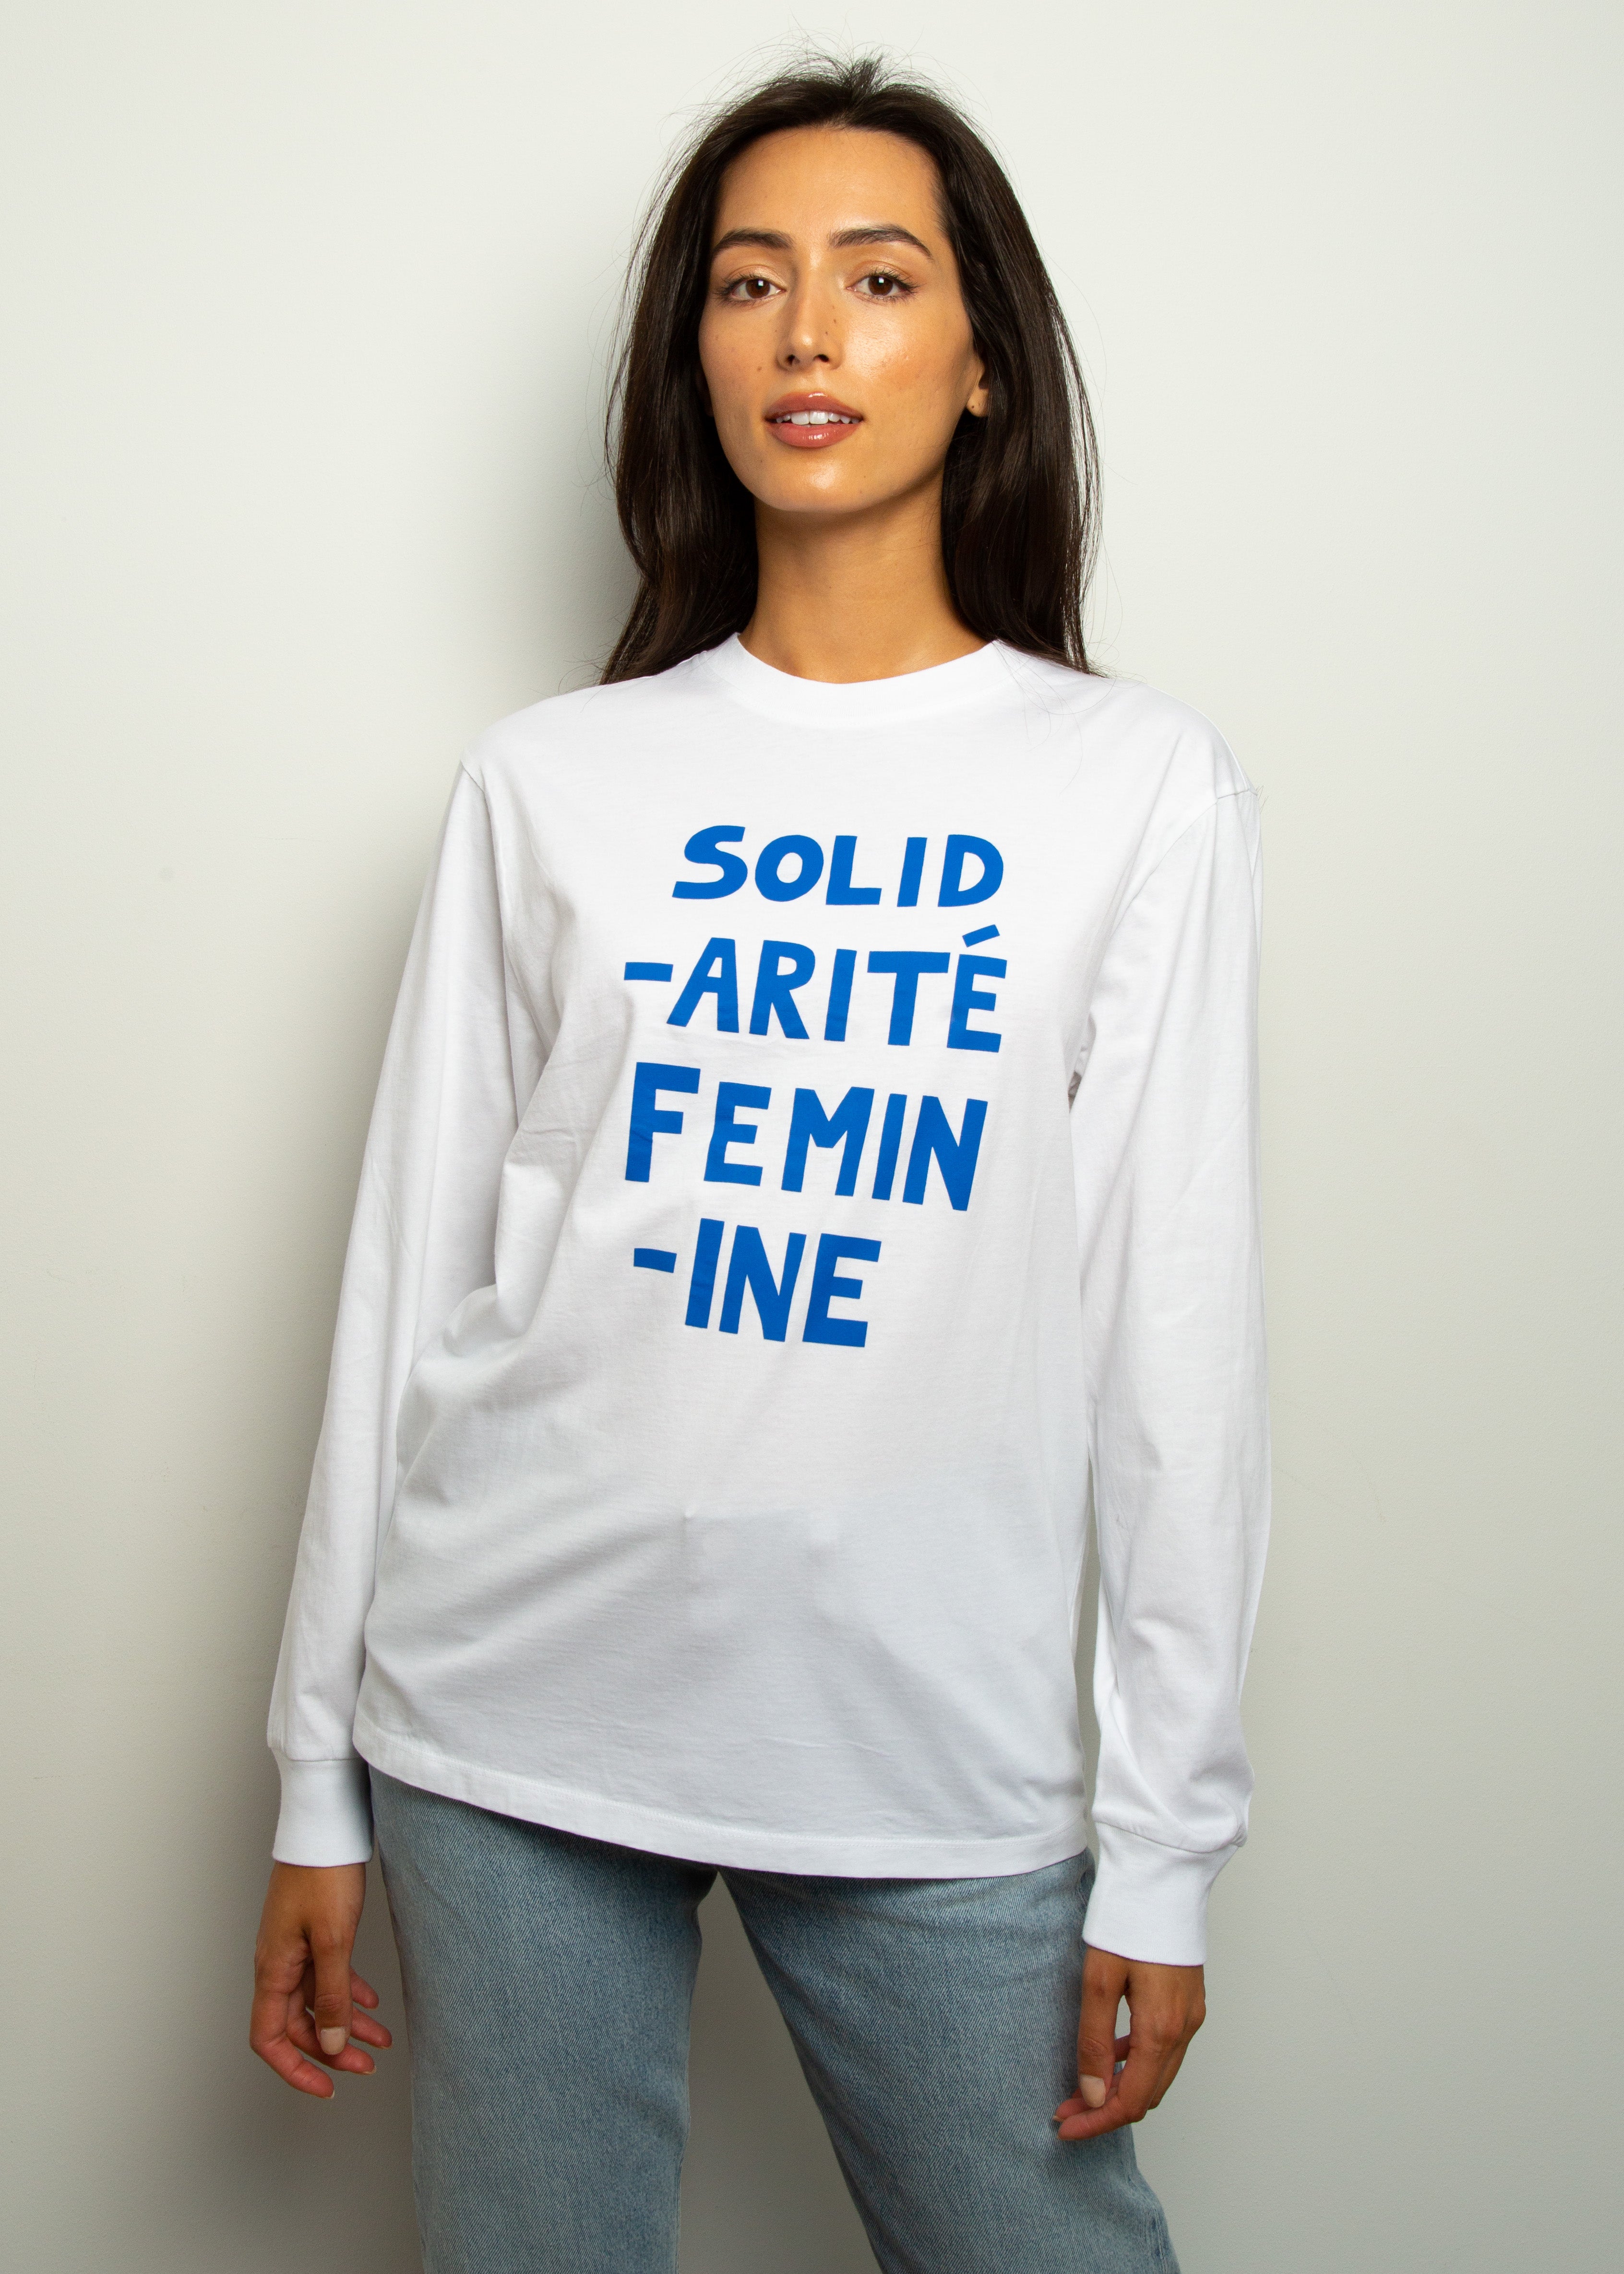 BF Solidaritie Feminine Top in White, Navy